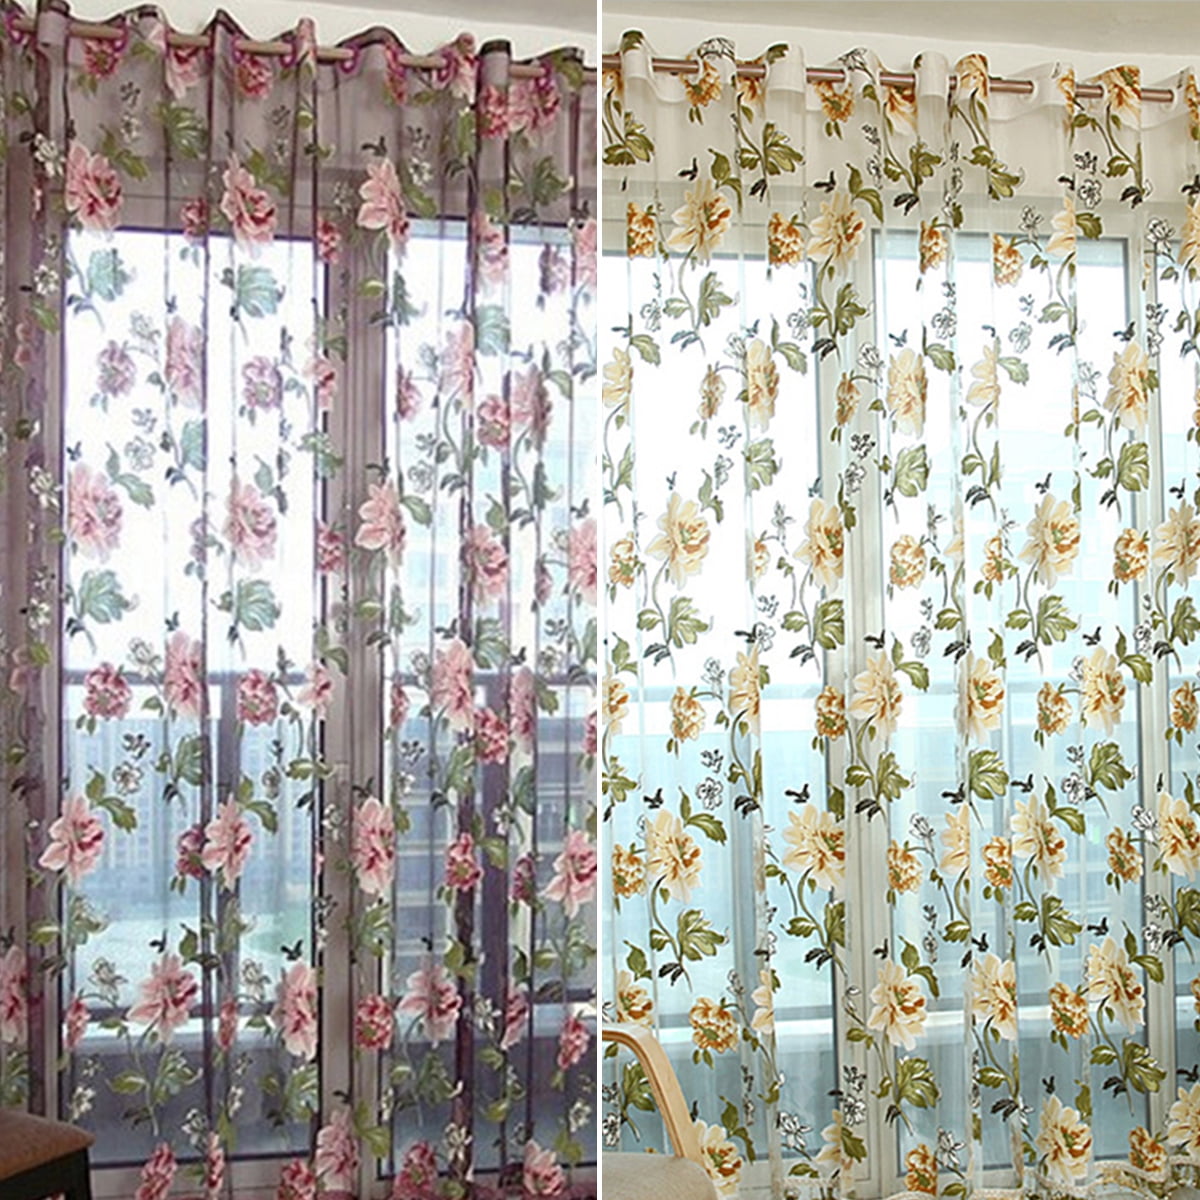 1PC Grommet Voile Sheer Floral Tulle Window Curtain Door Curtain Drape Panel 